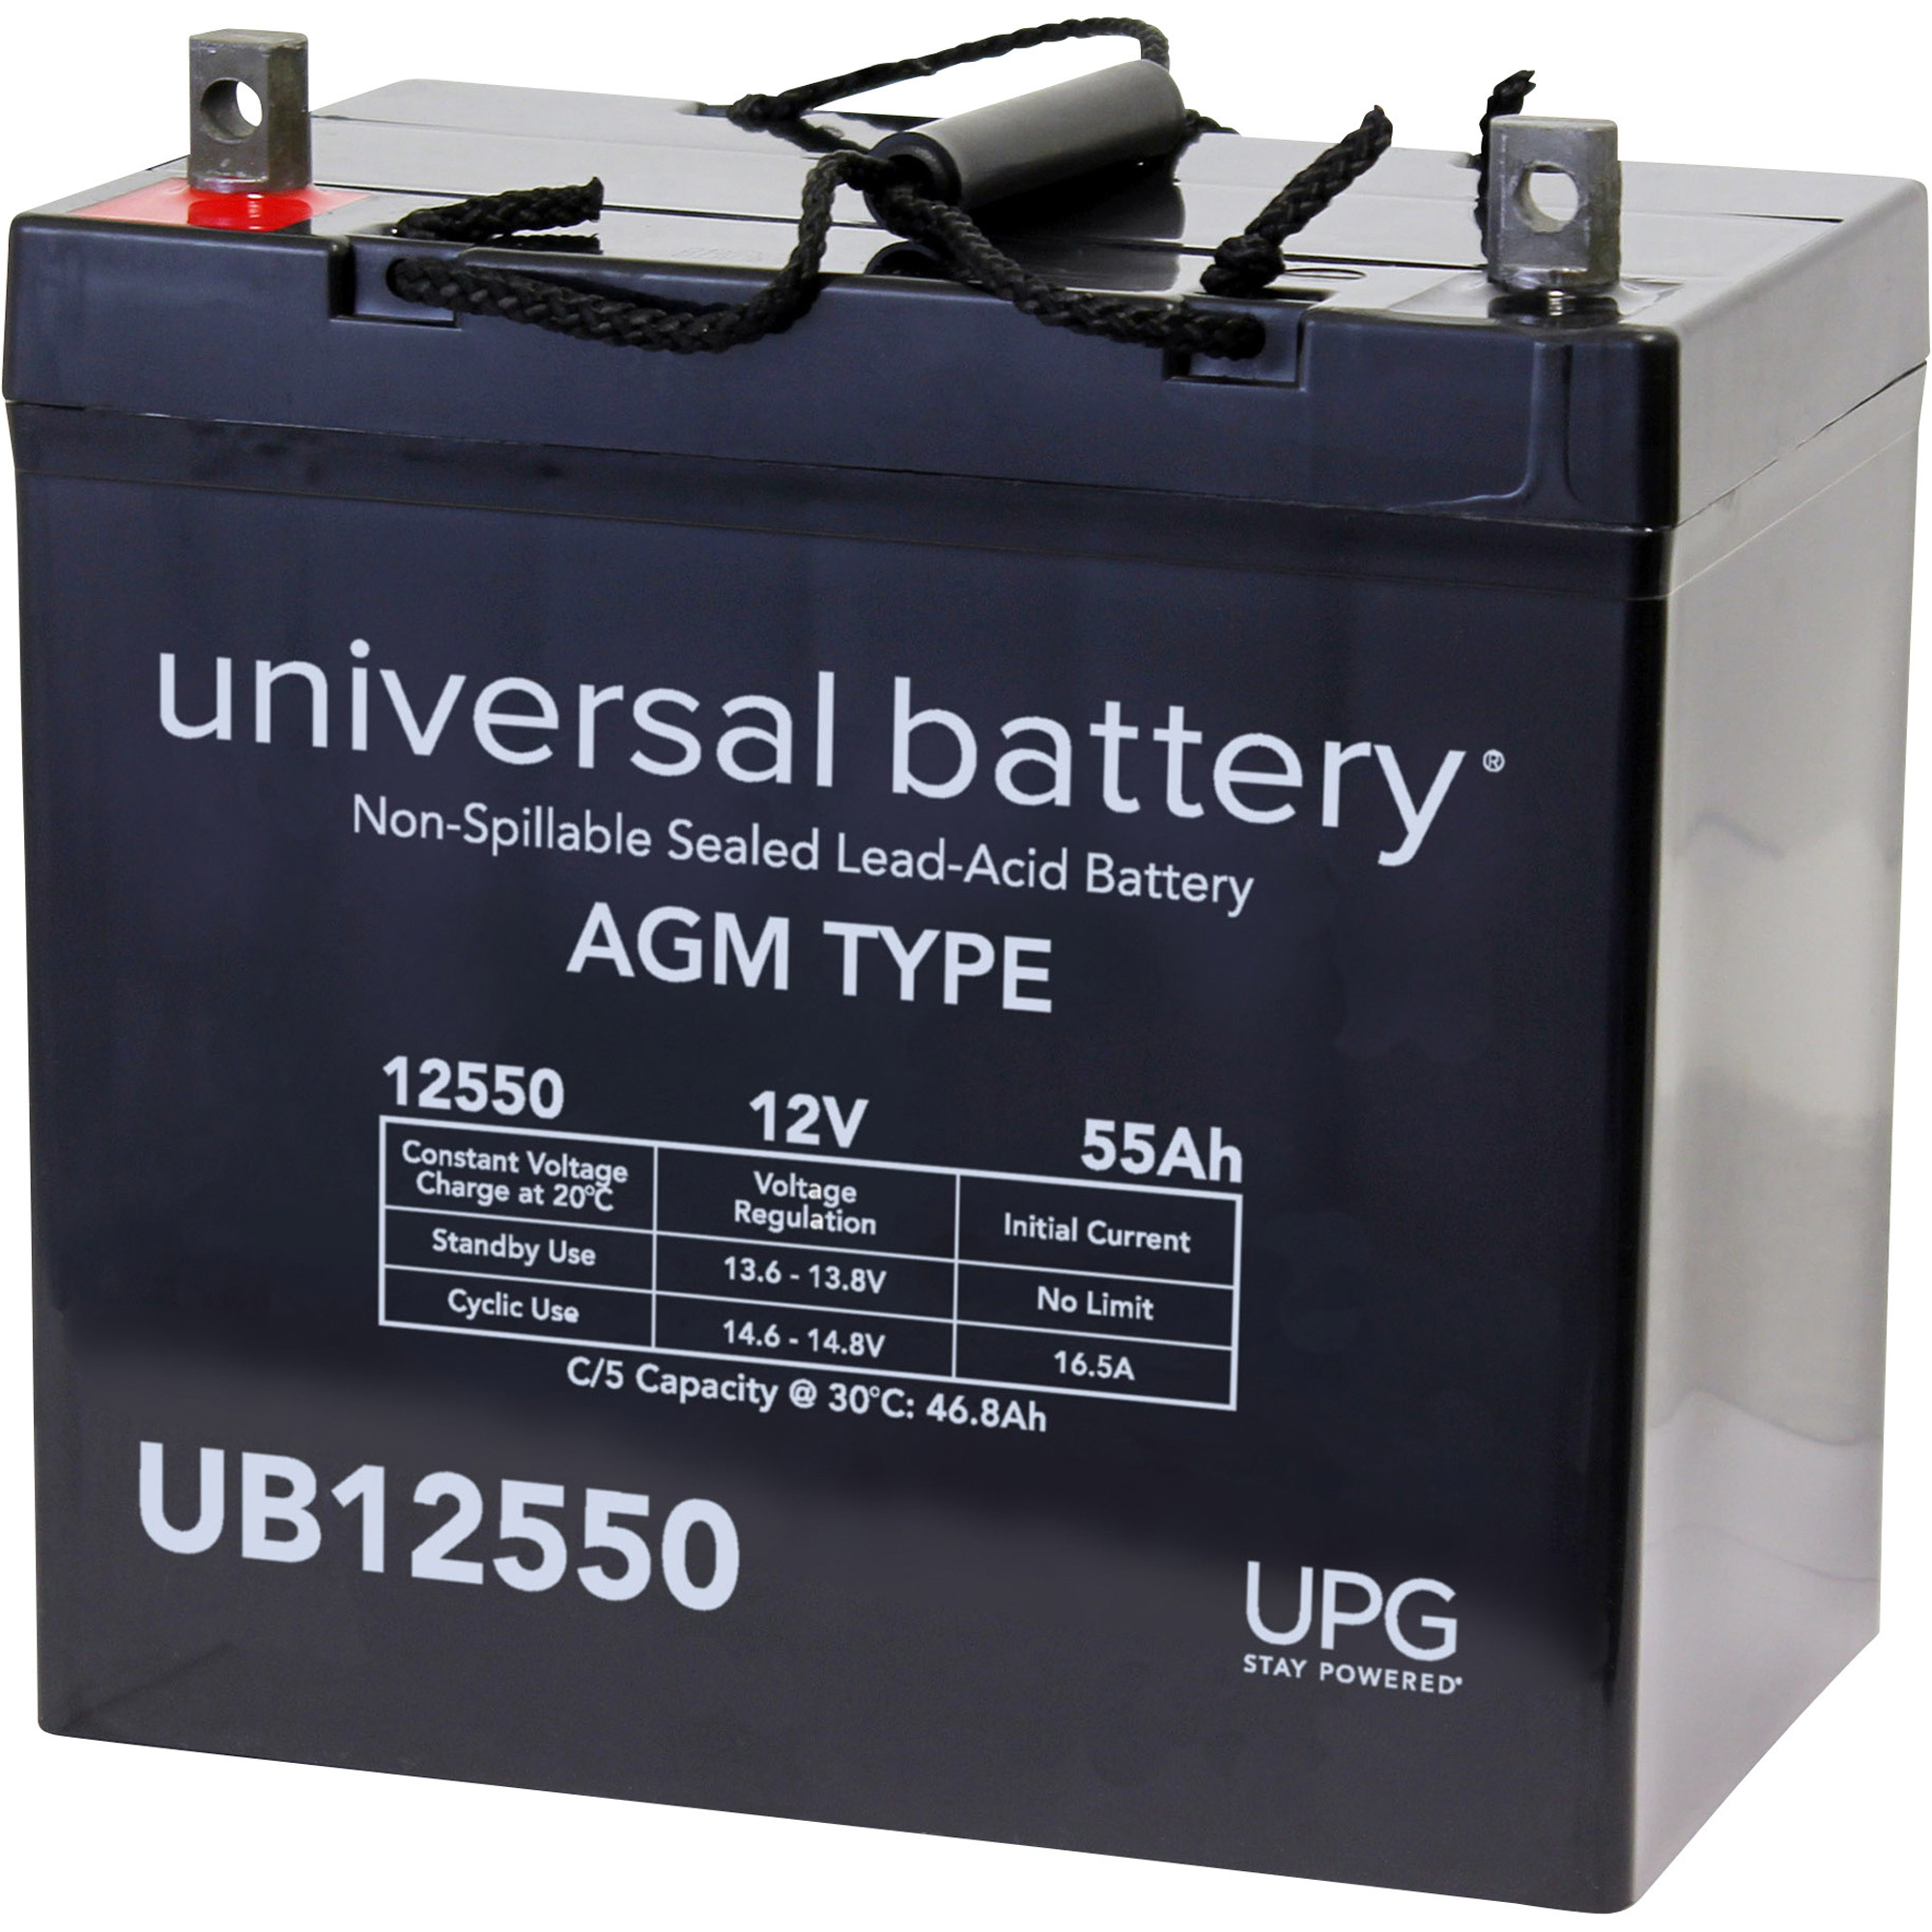 UPG Universal Sealed Lead-Acid Battery — AGM-type, 12V, 55 Amps, Group 22NF, Model UB12550 -  40740